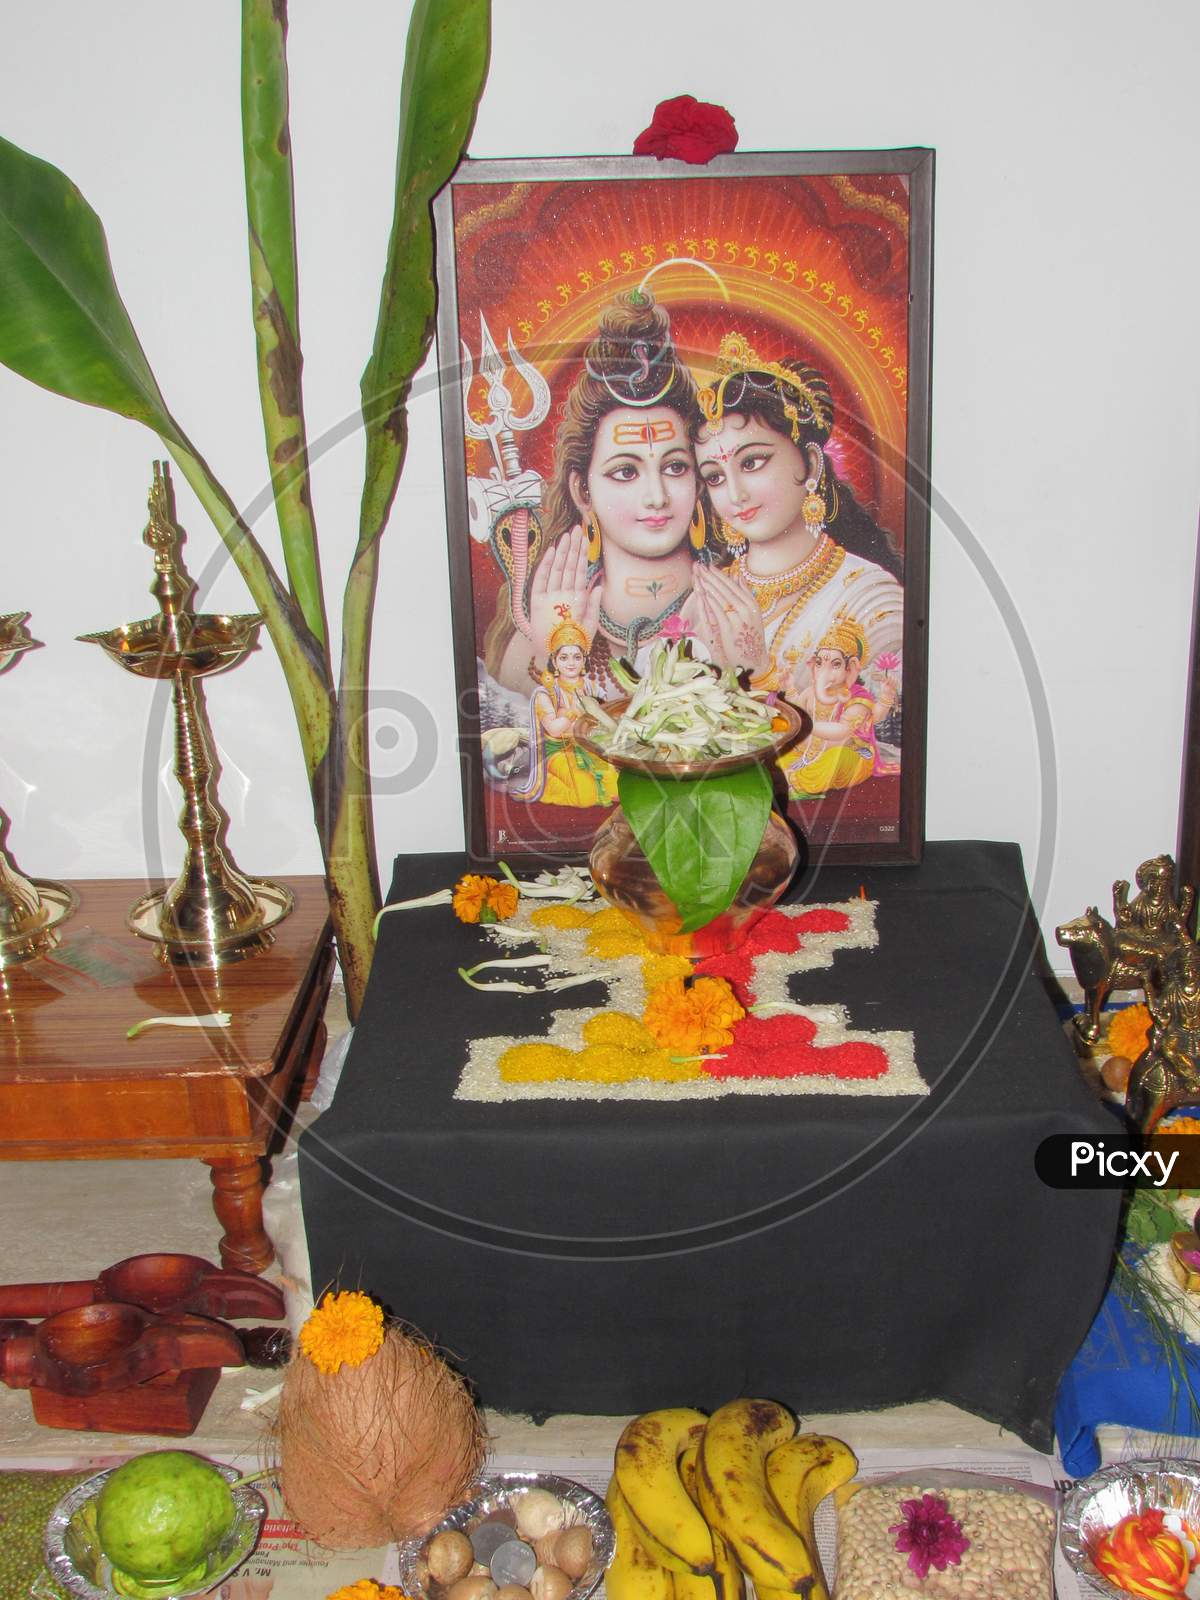 A photo of Indian god Shiva and goddess Parvati